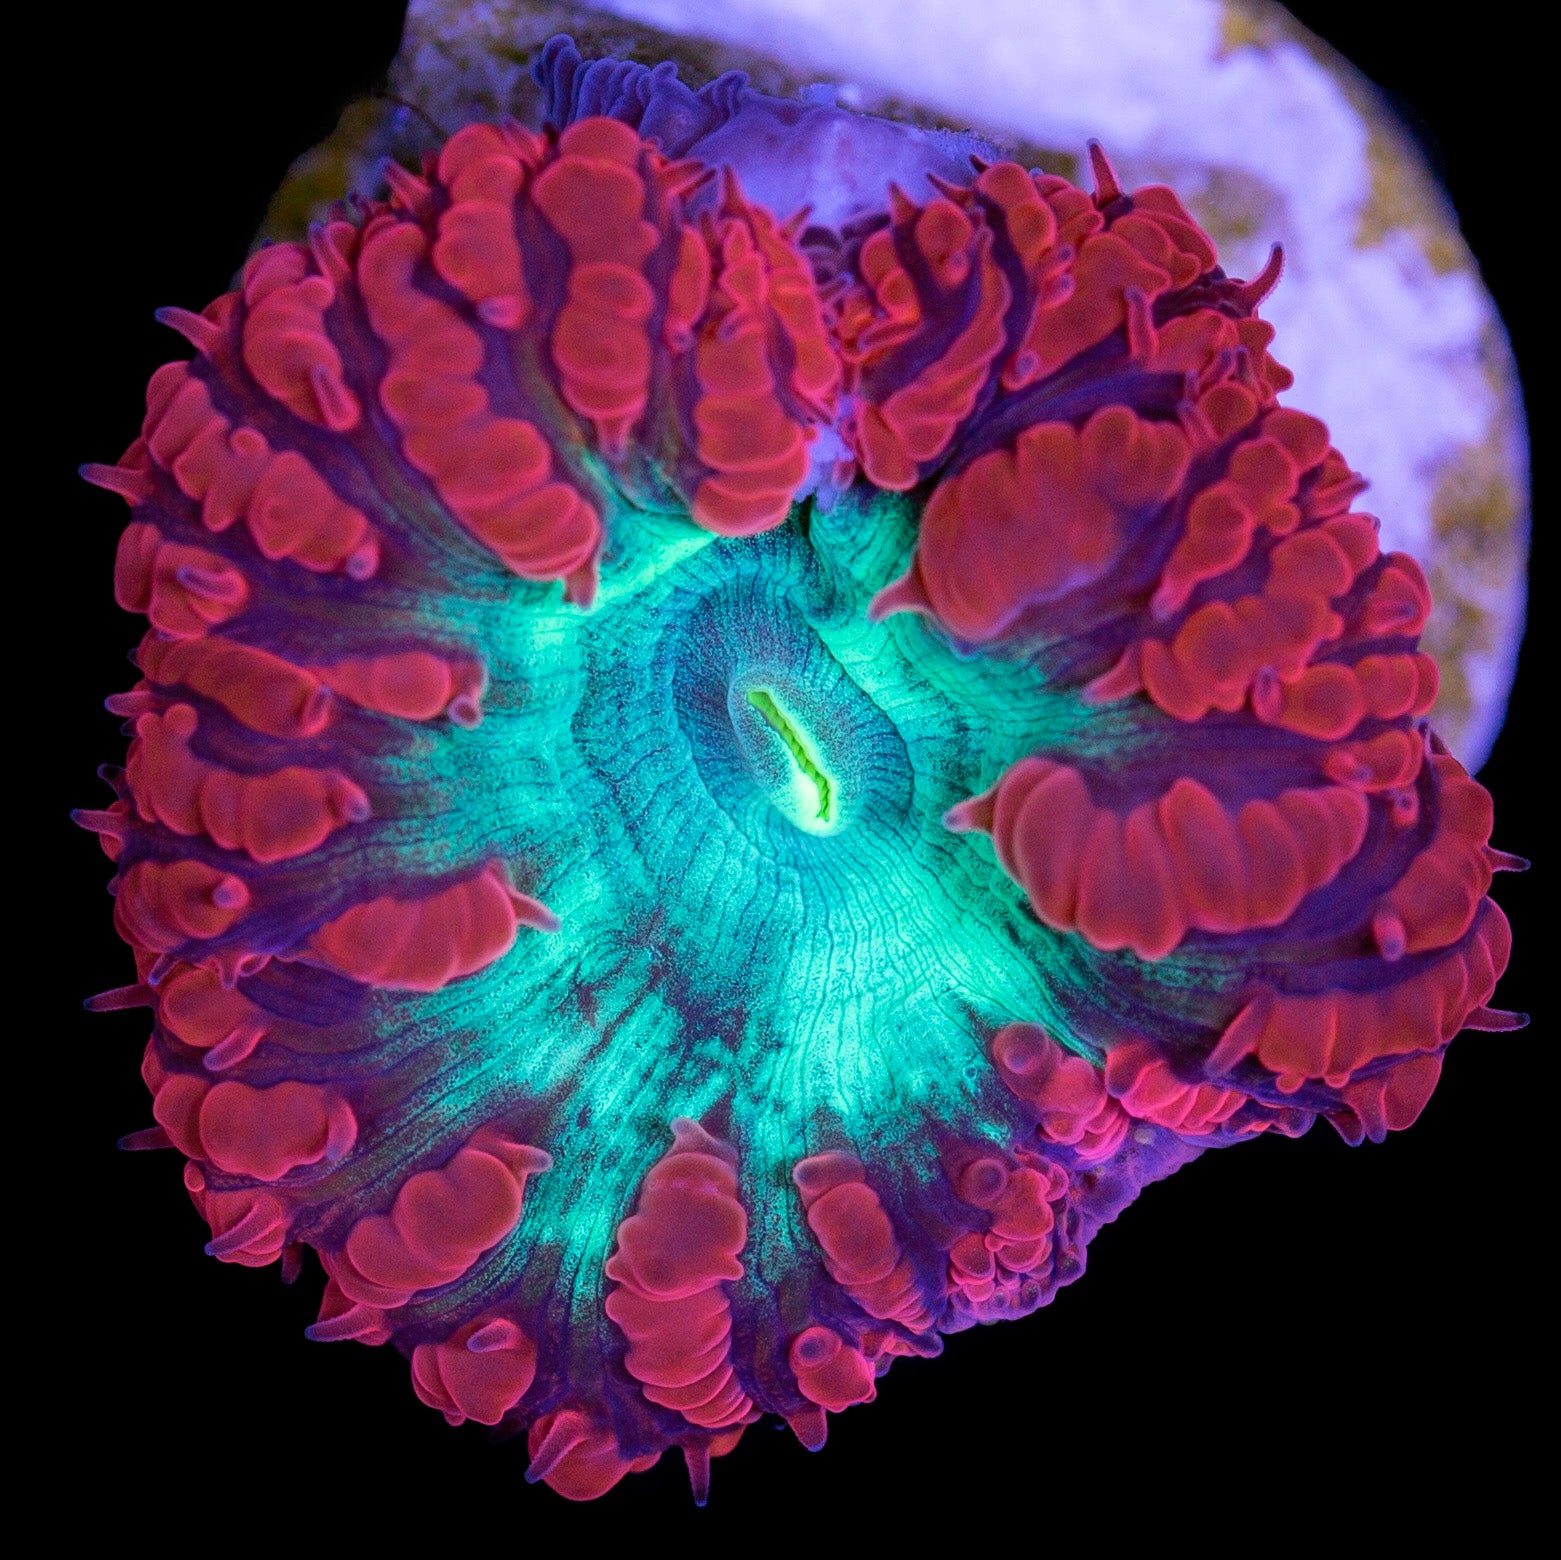 Red & Green Blastomussa Coral